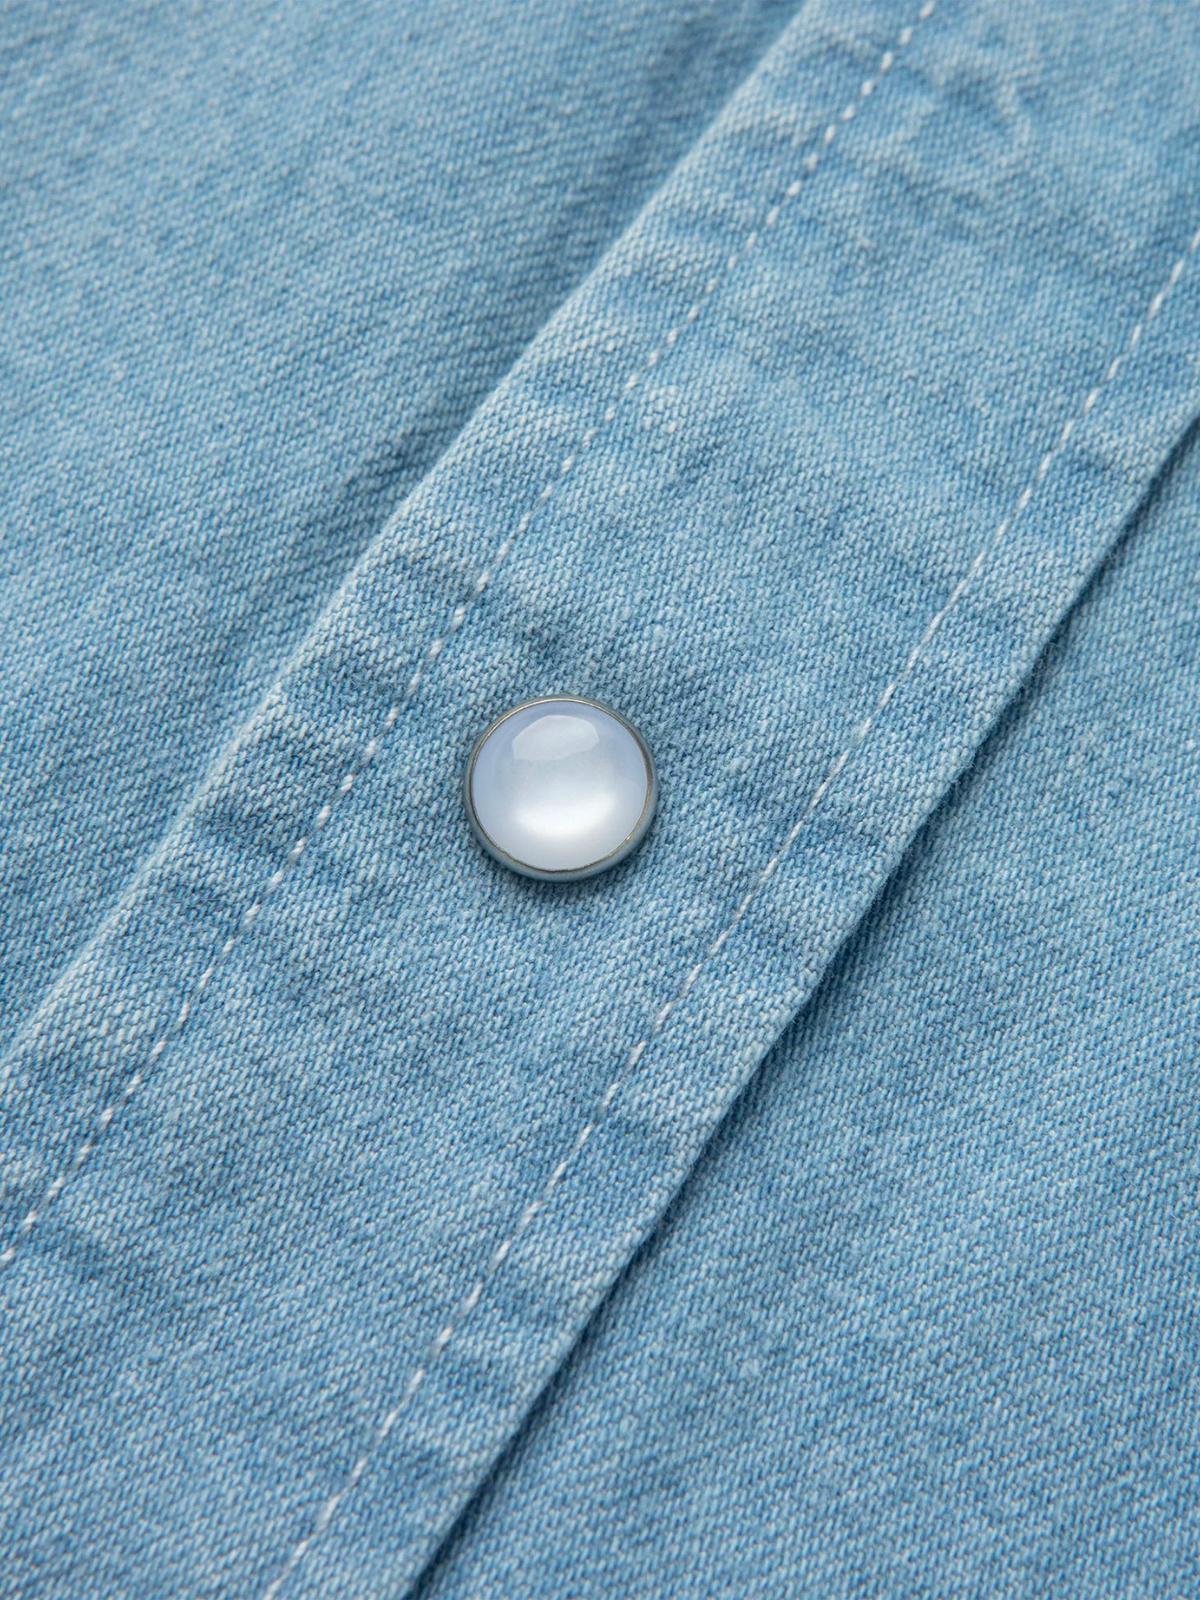  seager reagan pearl snap light wash indigo denim chambray button up western shirt kempt athens ga georgia men's clothing store